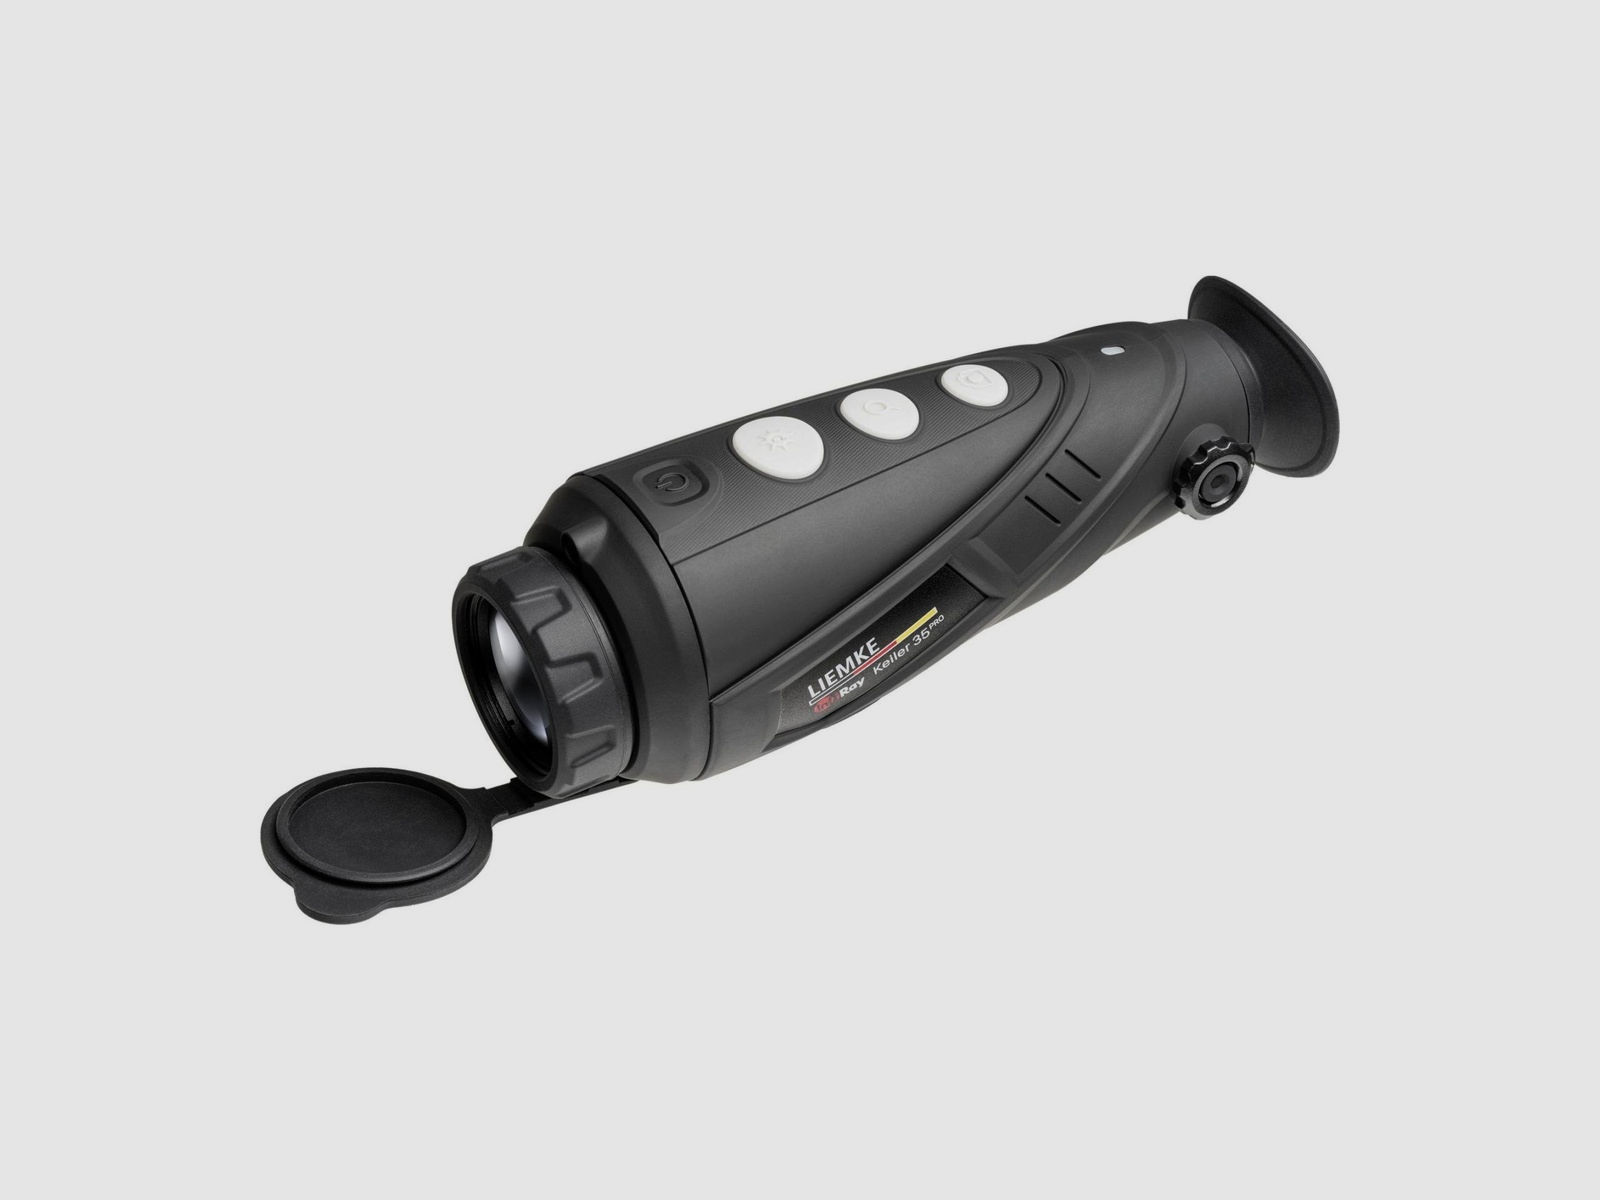 Liemke Wärmebildkamera Keiler-35 Pro (2020) Schwarz